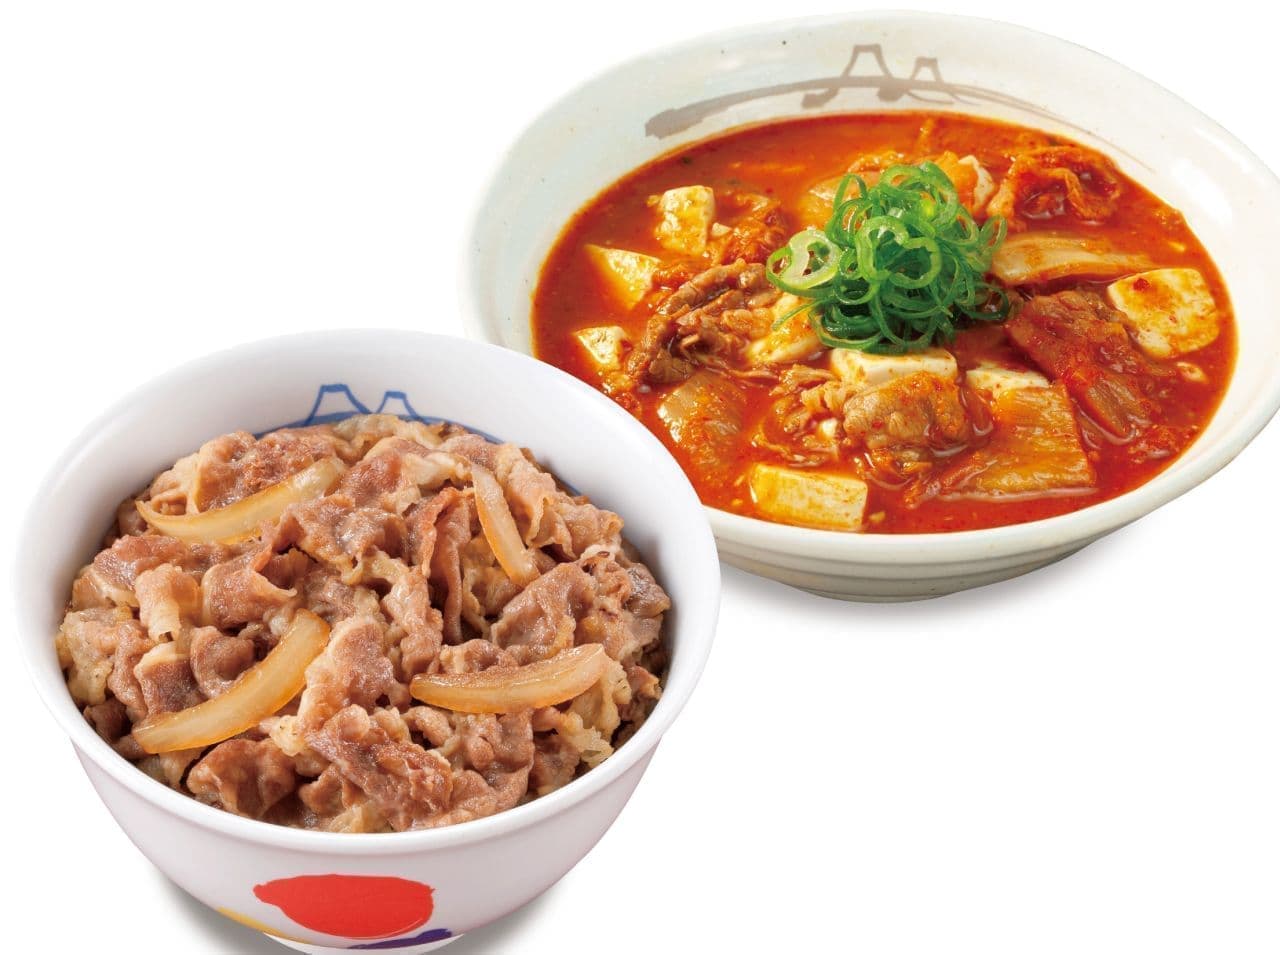 Matsuya "Beef rice kimchi jjigae set 100 yen discount" for 1 week only